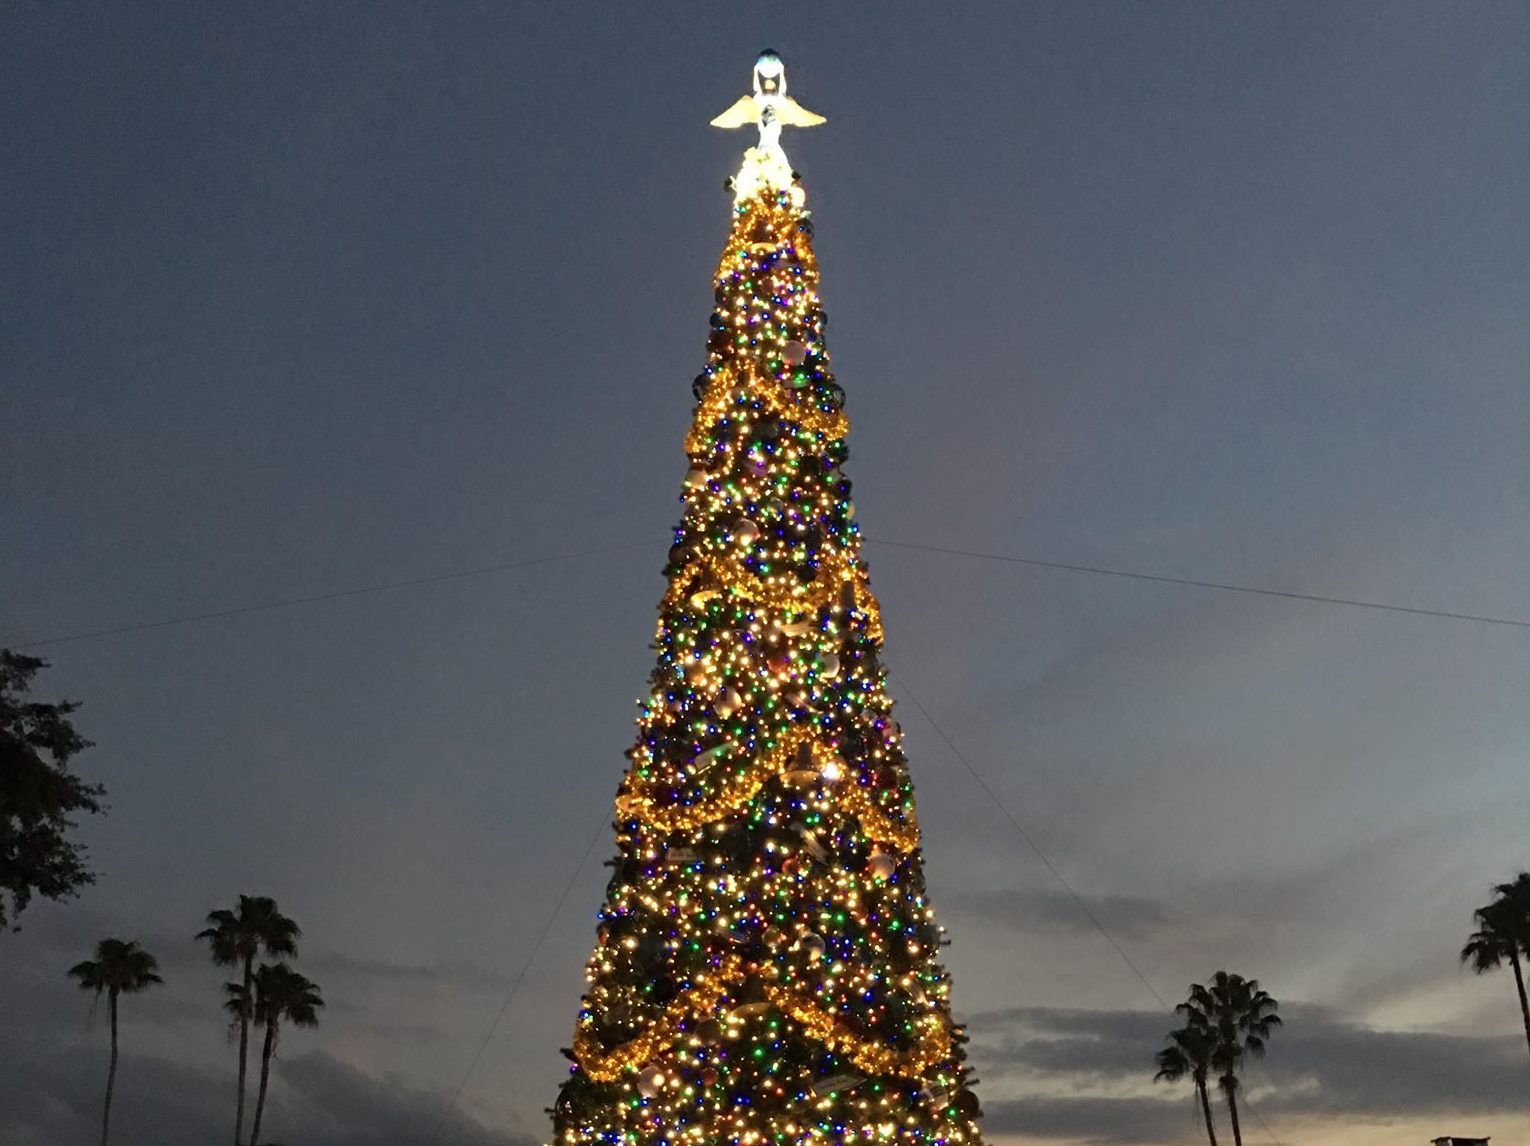 Epcot’s World Showcase Christmas Tree Has Gone Up